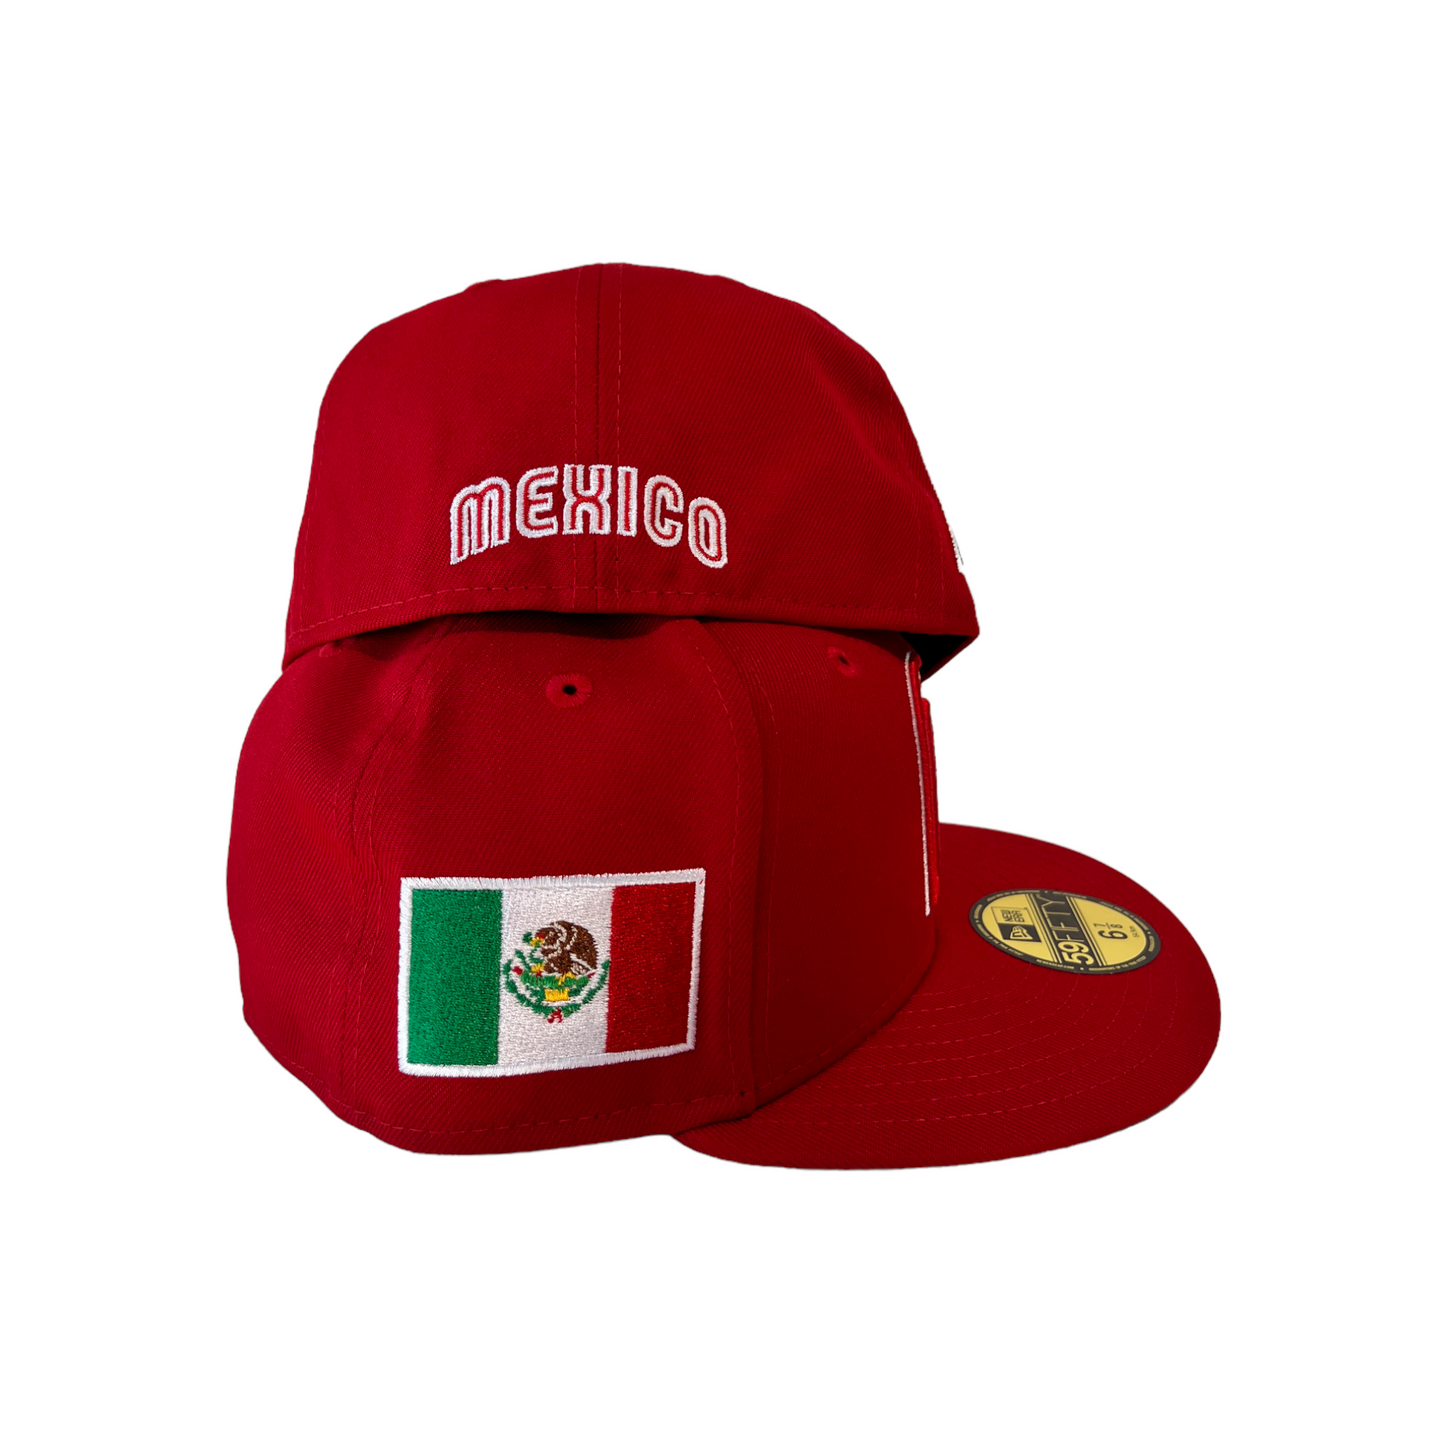 Mexico Red/White